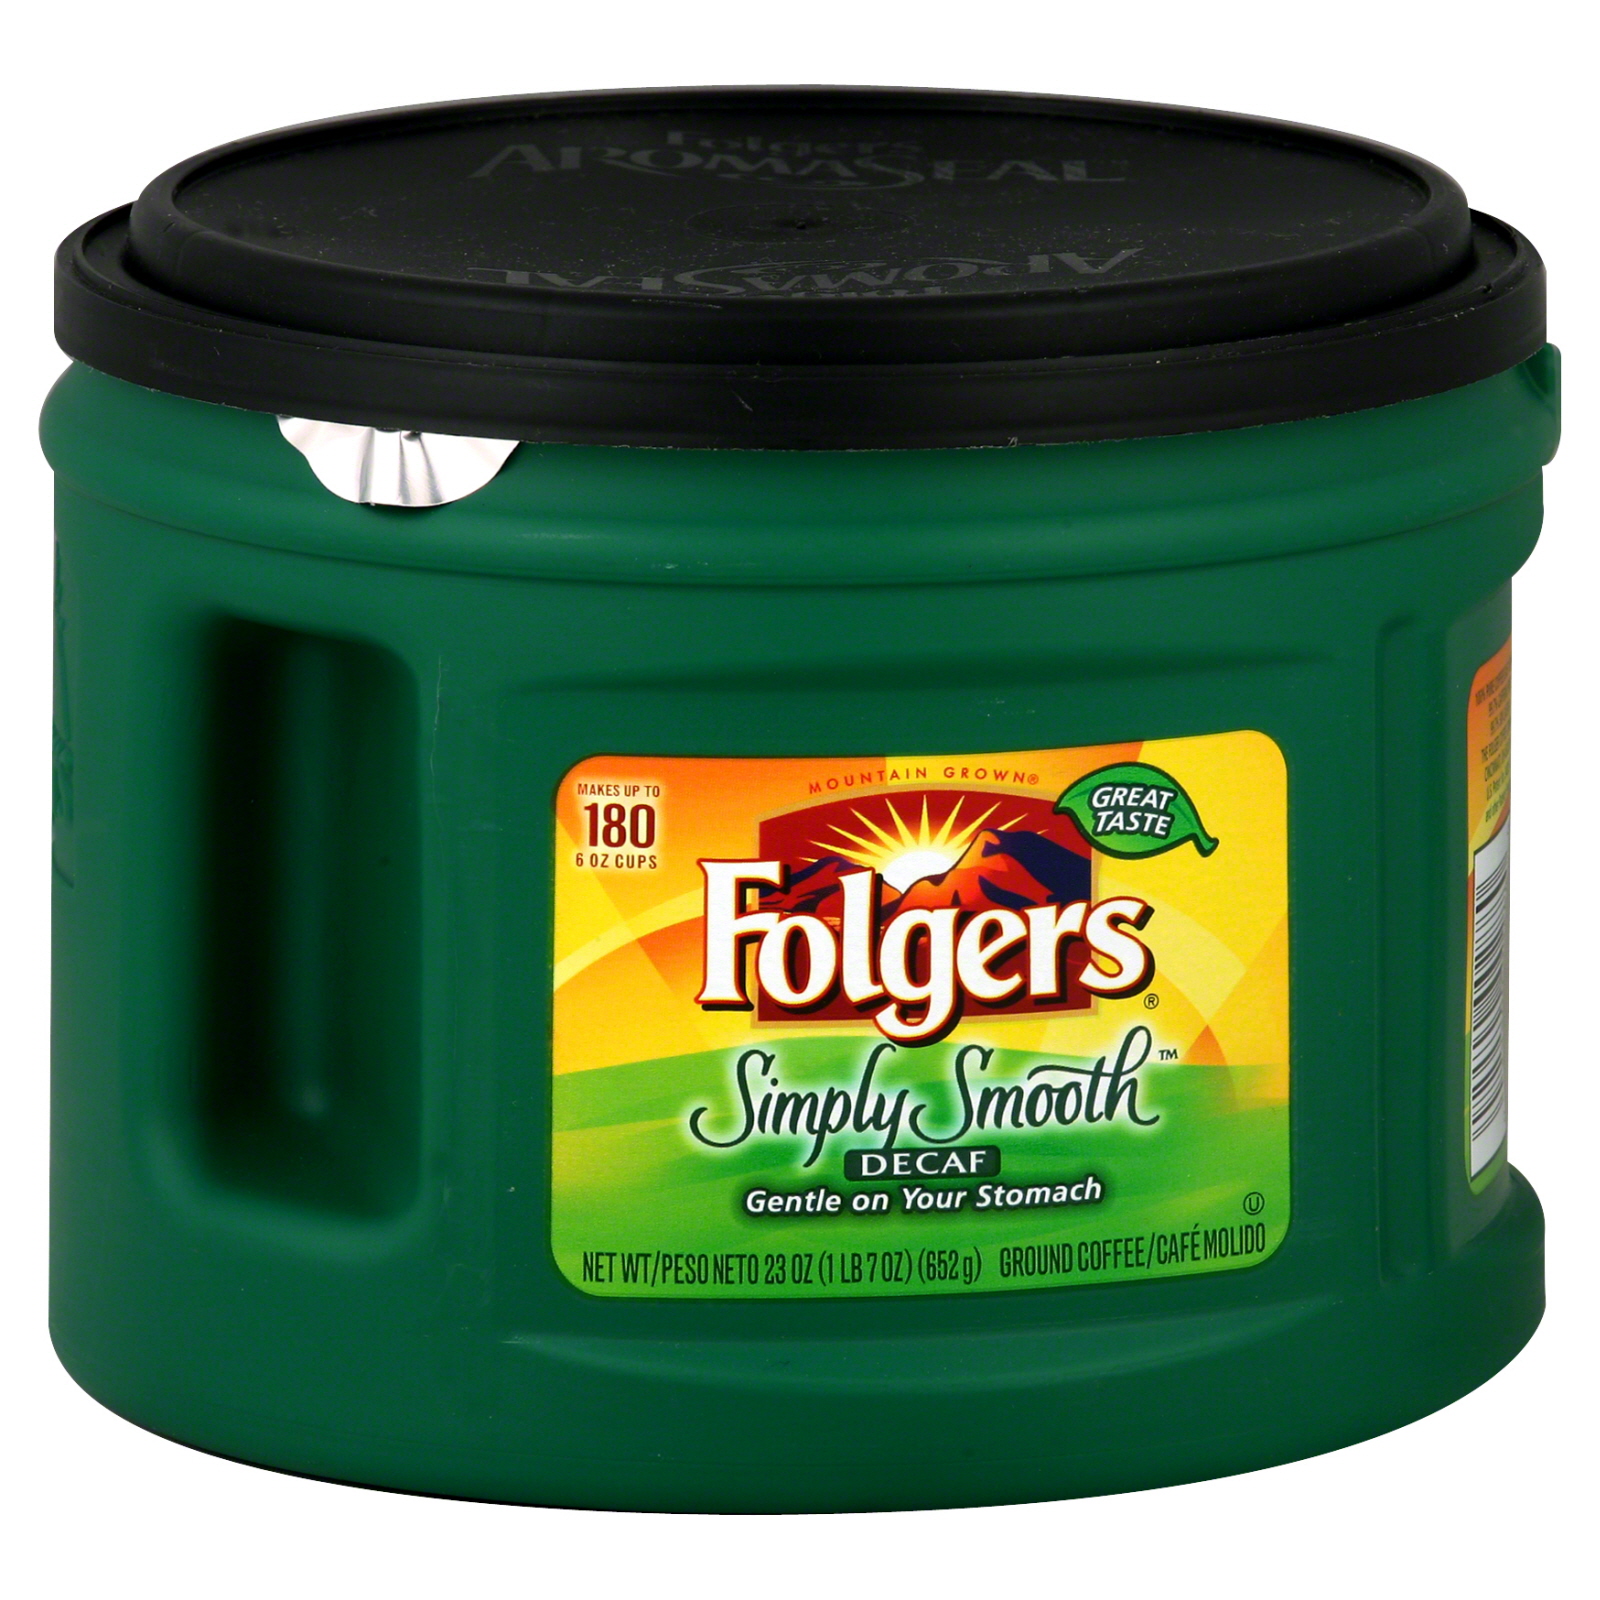 Folgers Simply Smooth Ground Coffee, Decaf, 23 oz (1 lb 7